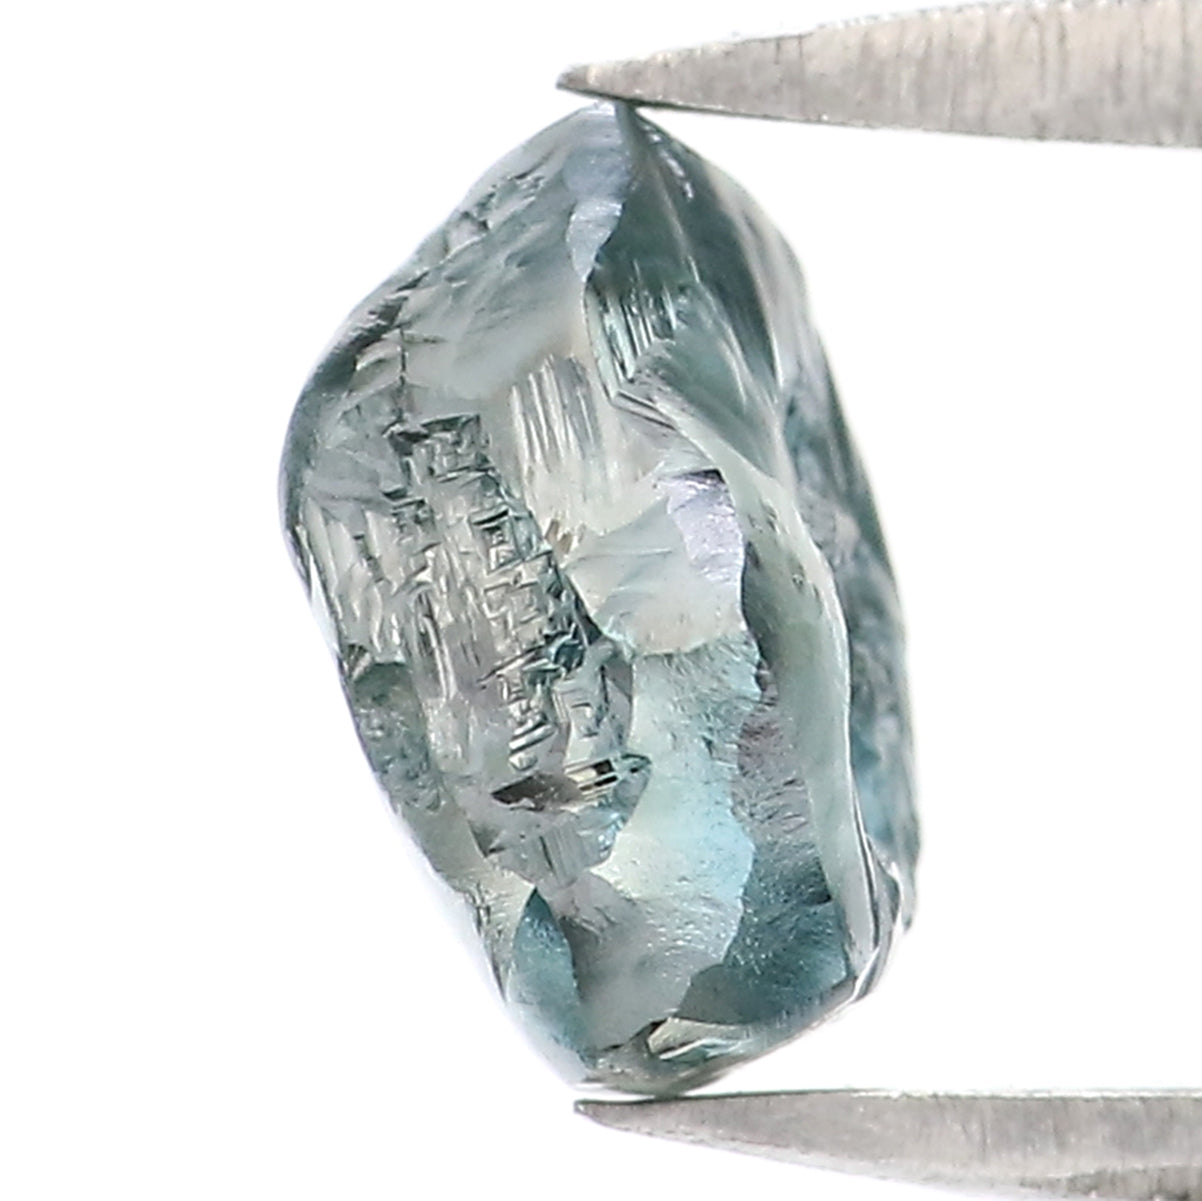 Natural Loose Rough Blue Color Diamond 1.04 CT 6.61 MM Rough Irregular Cut Diamond KDL2256